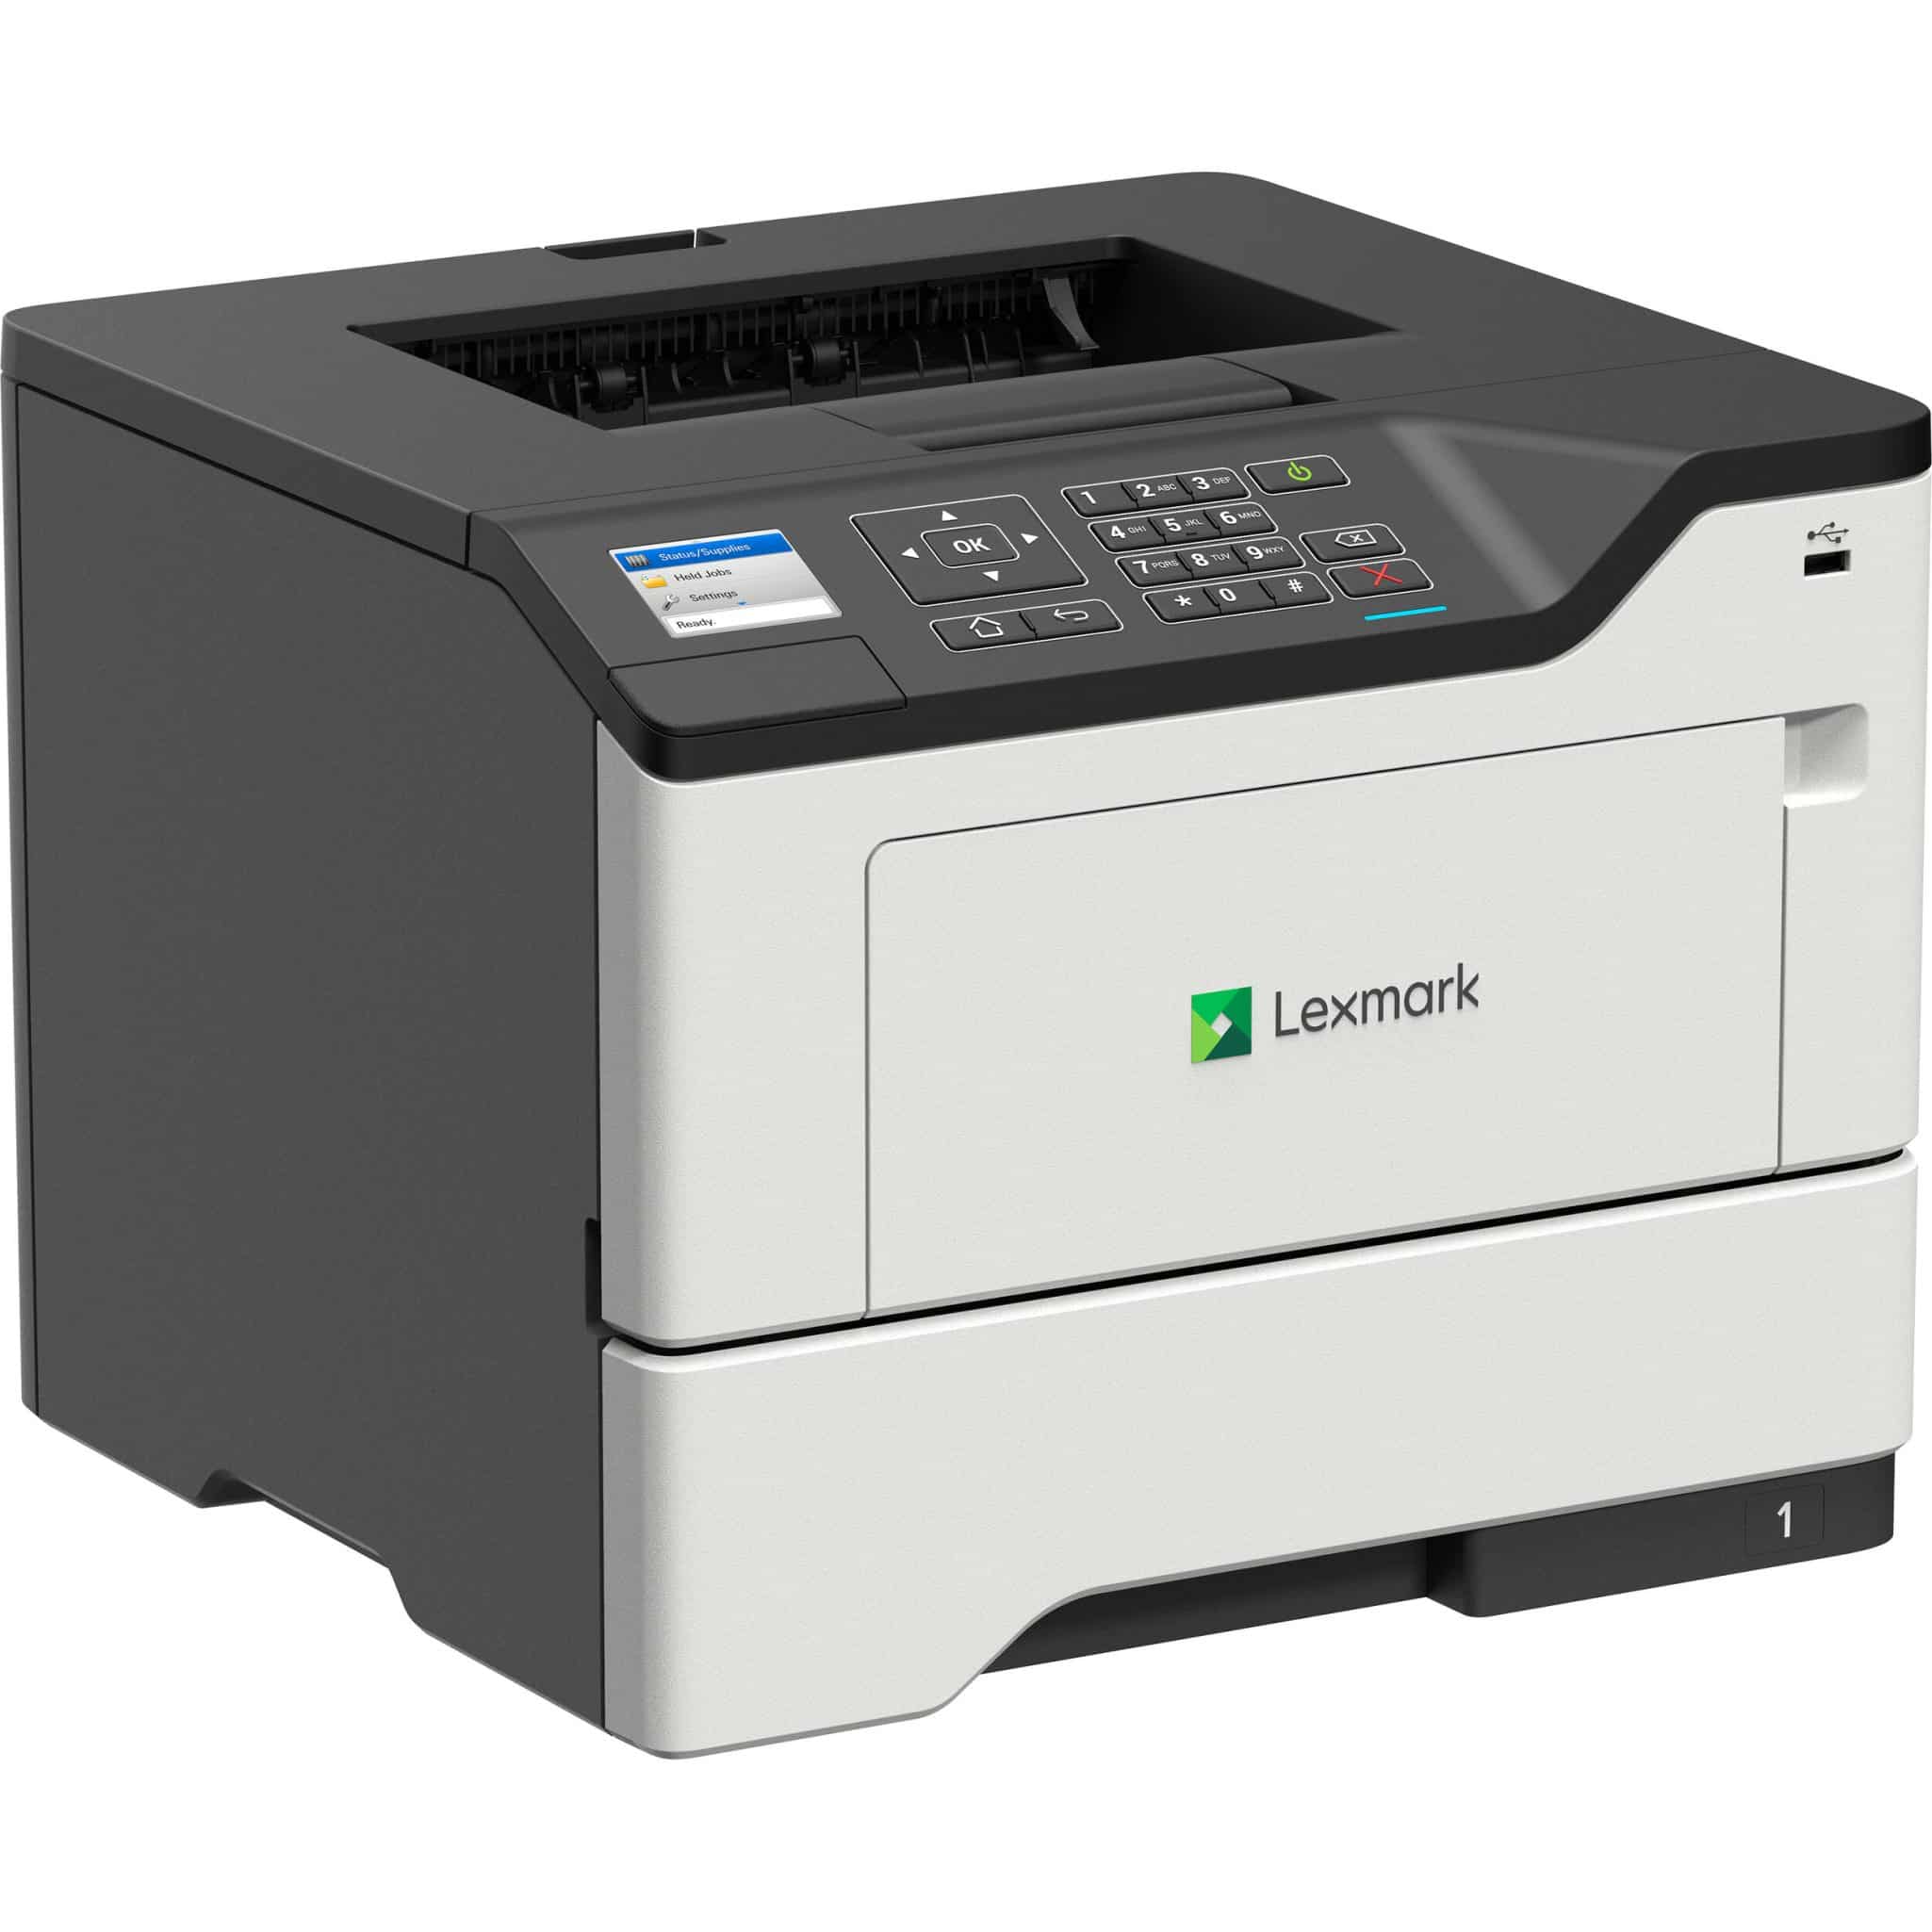 Lexmark Printers Driver 64 Bit Download Free For Windows